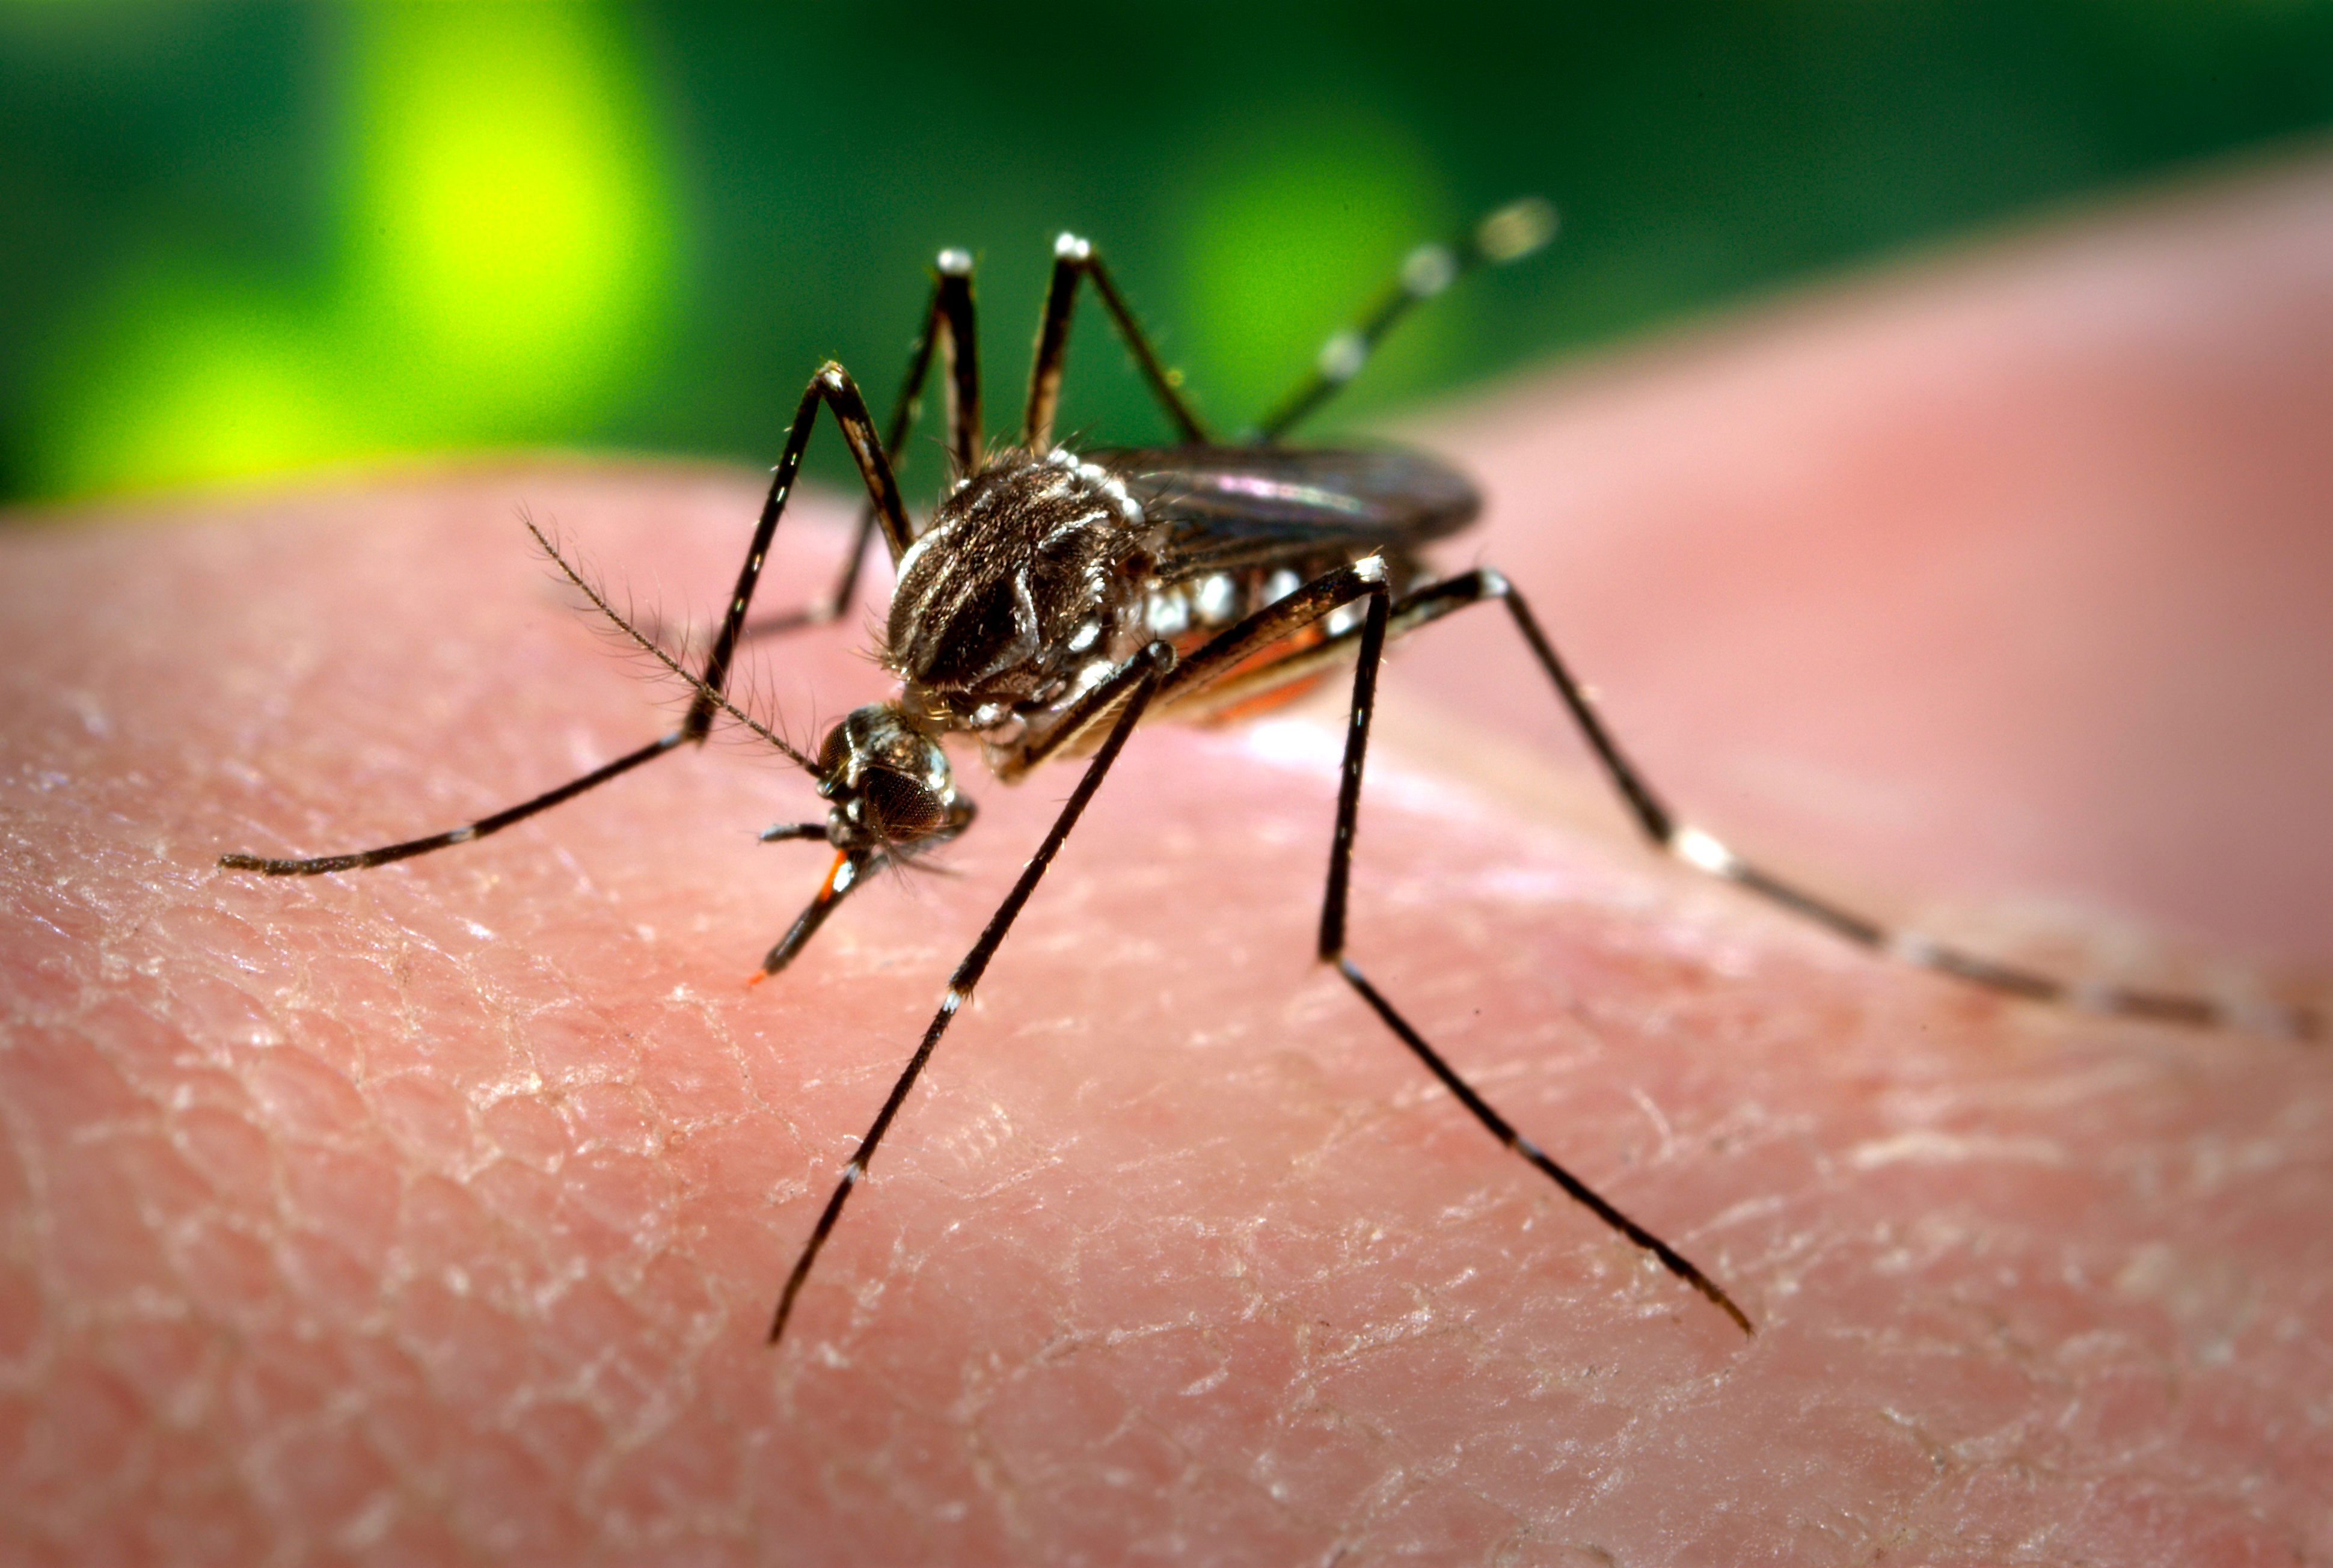 16738-close-up-of-a-mosquito-feeding-on-blood_freestockphotos_biz.jpg